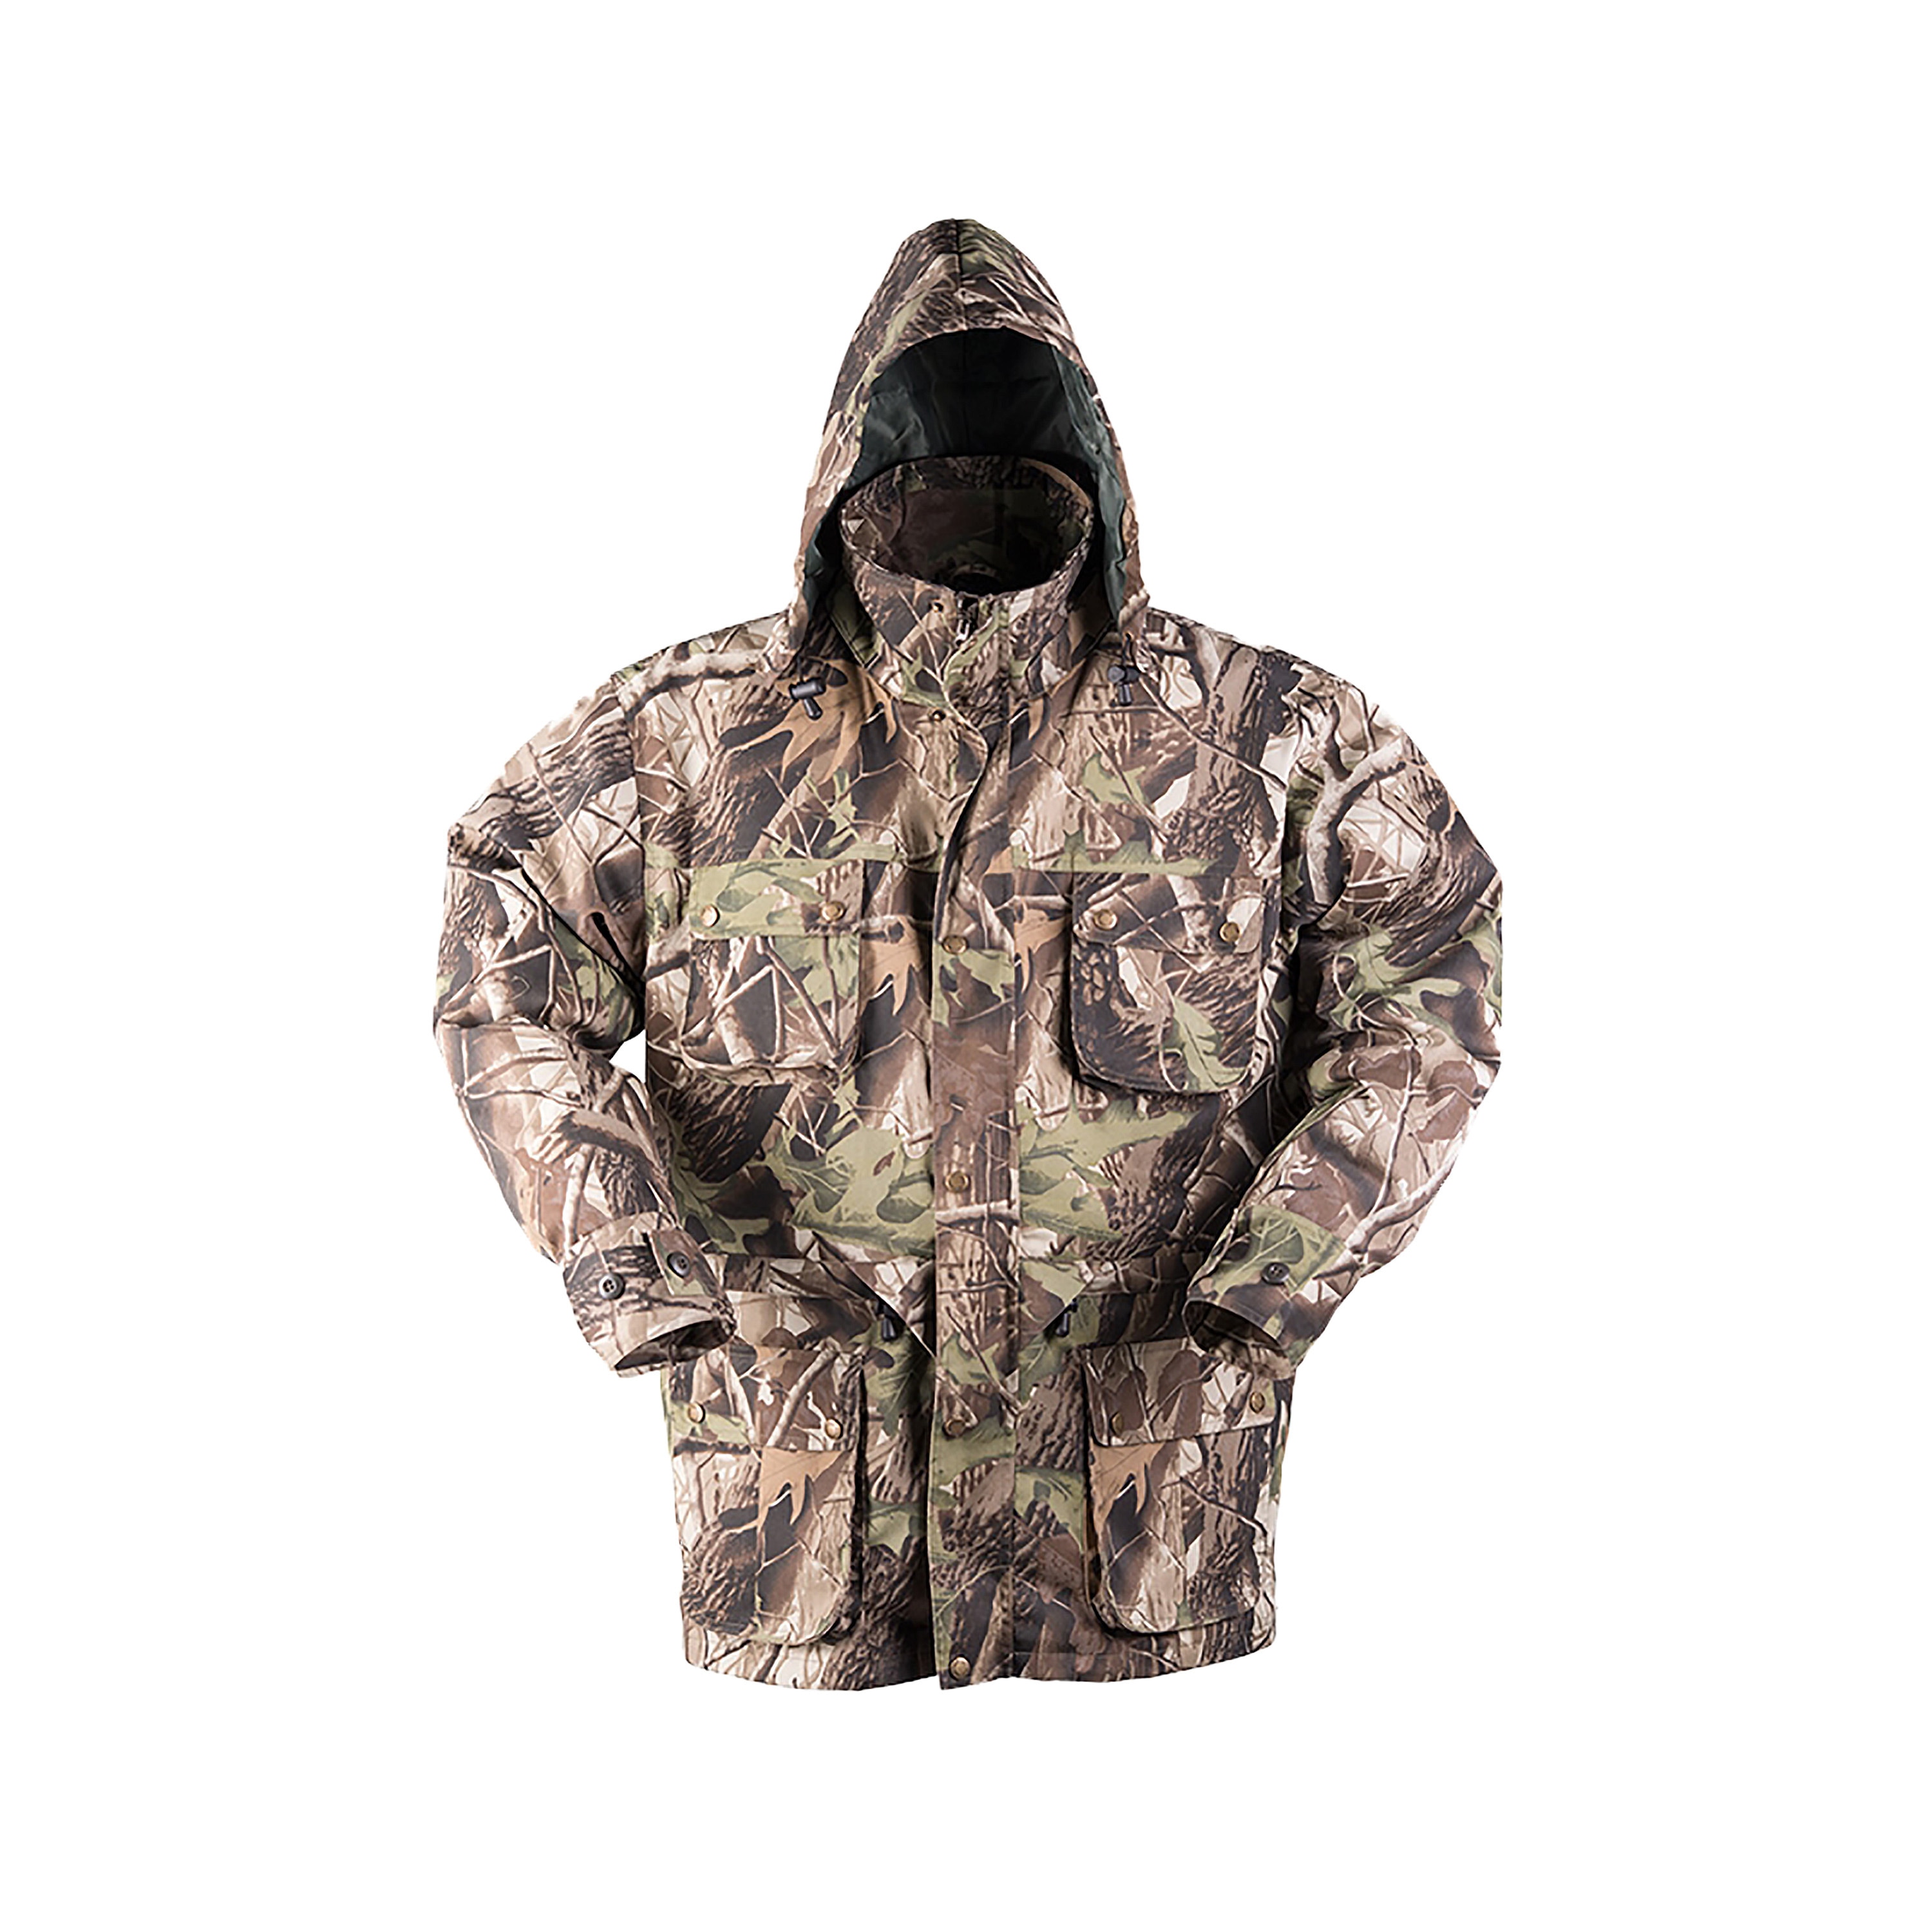 Jacket Hunting Hunting Camo | Jackets | Jackets | | Clothing